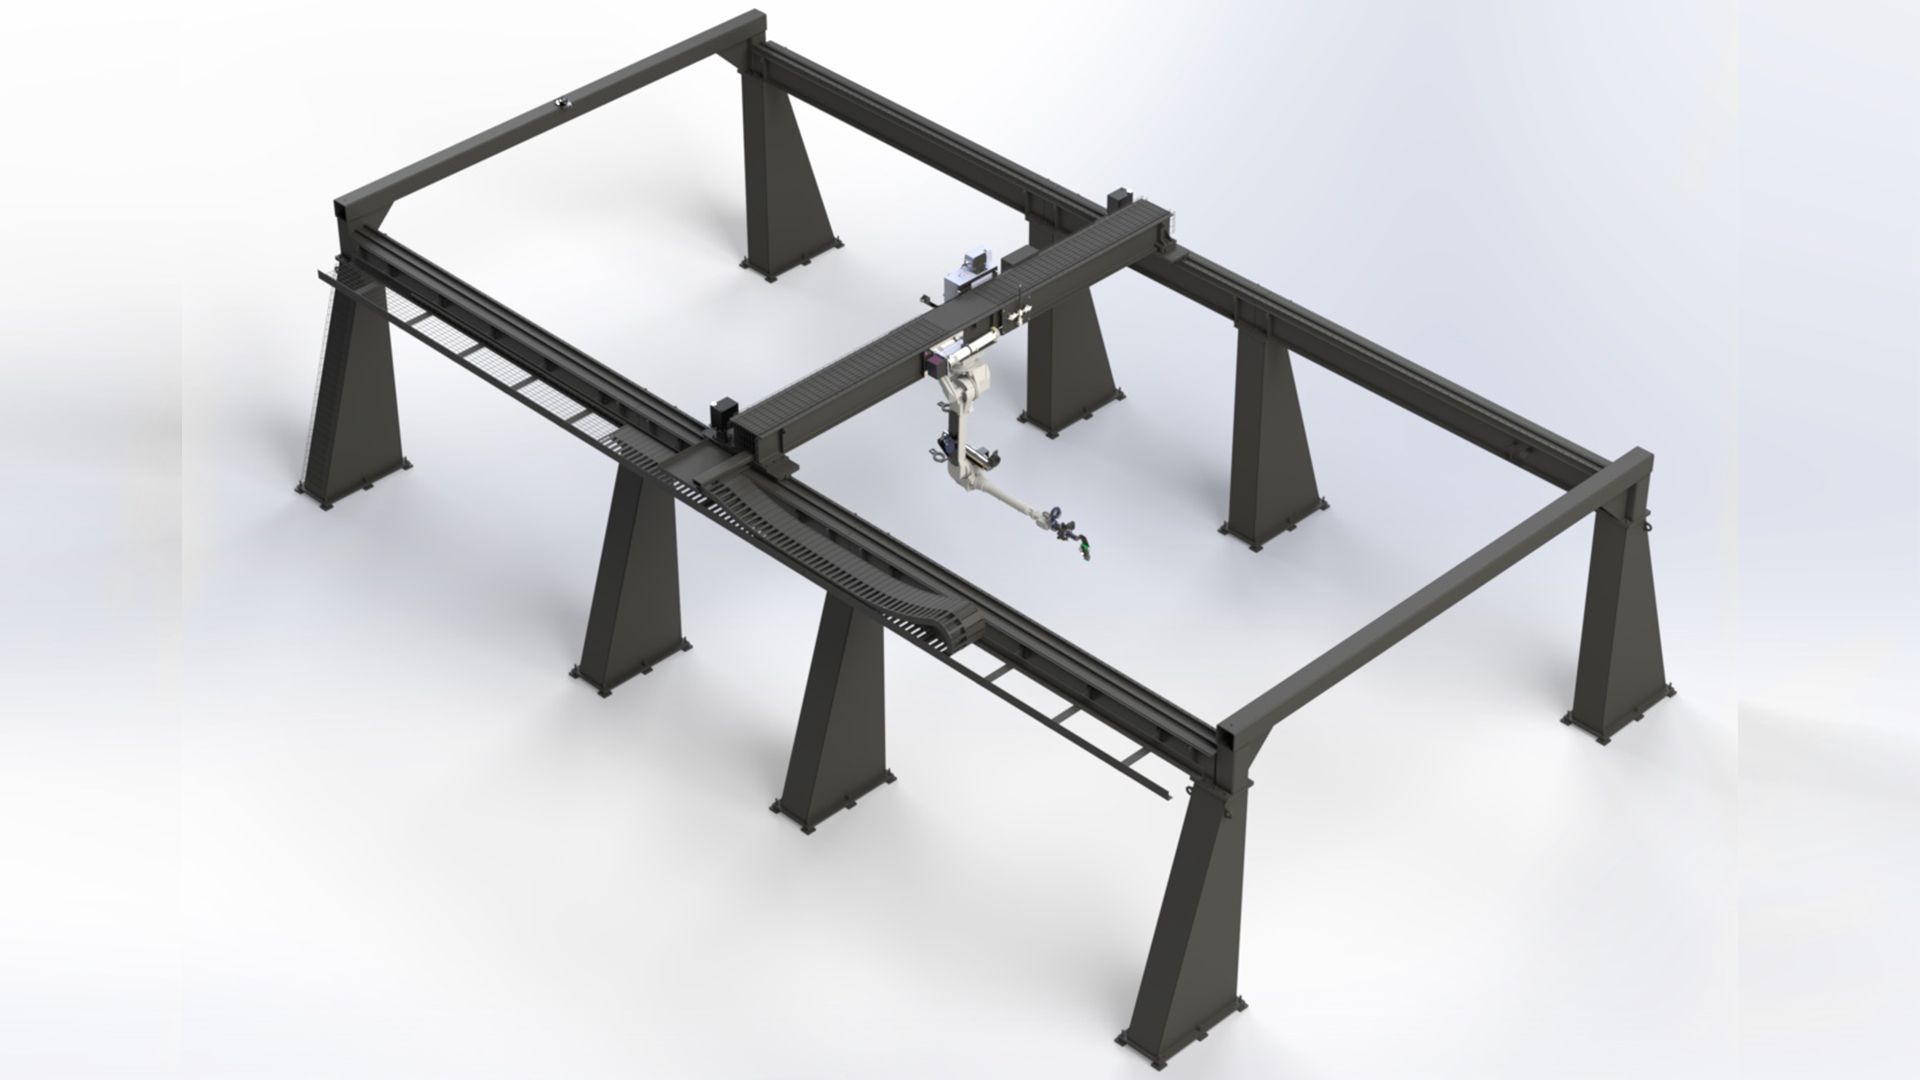 A render of a robotic overhead gantry.